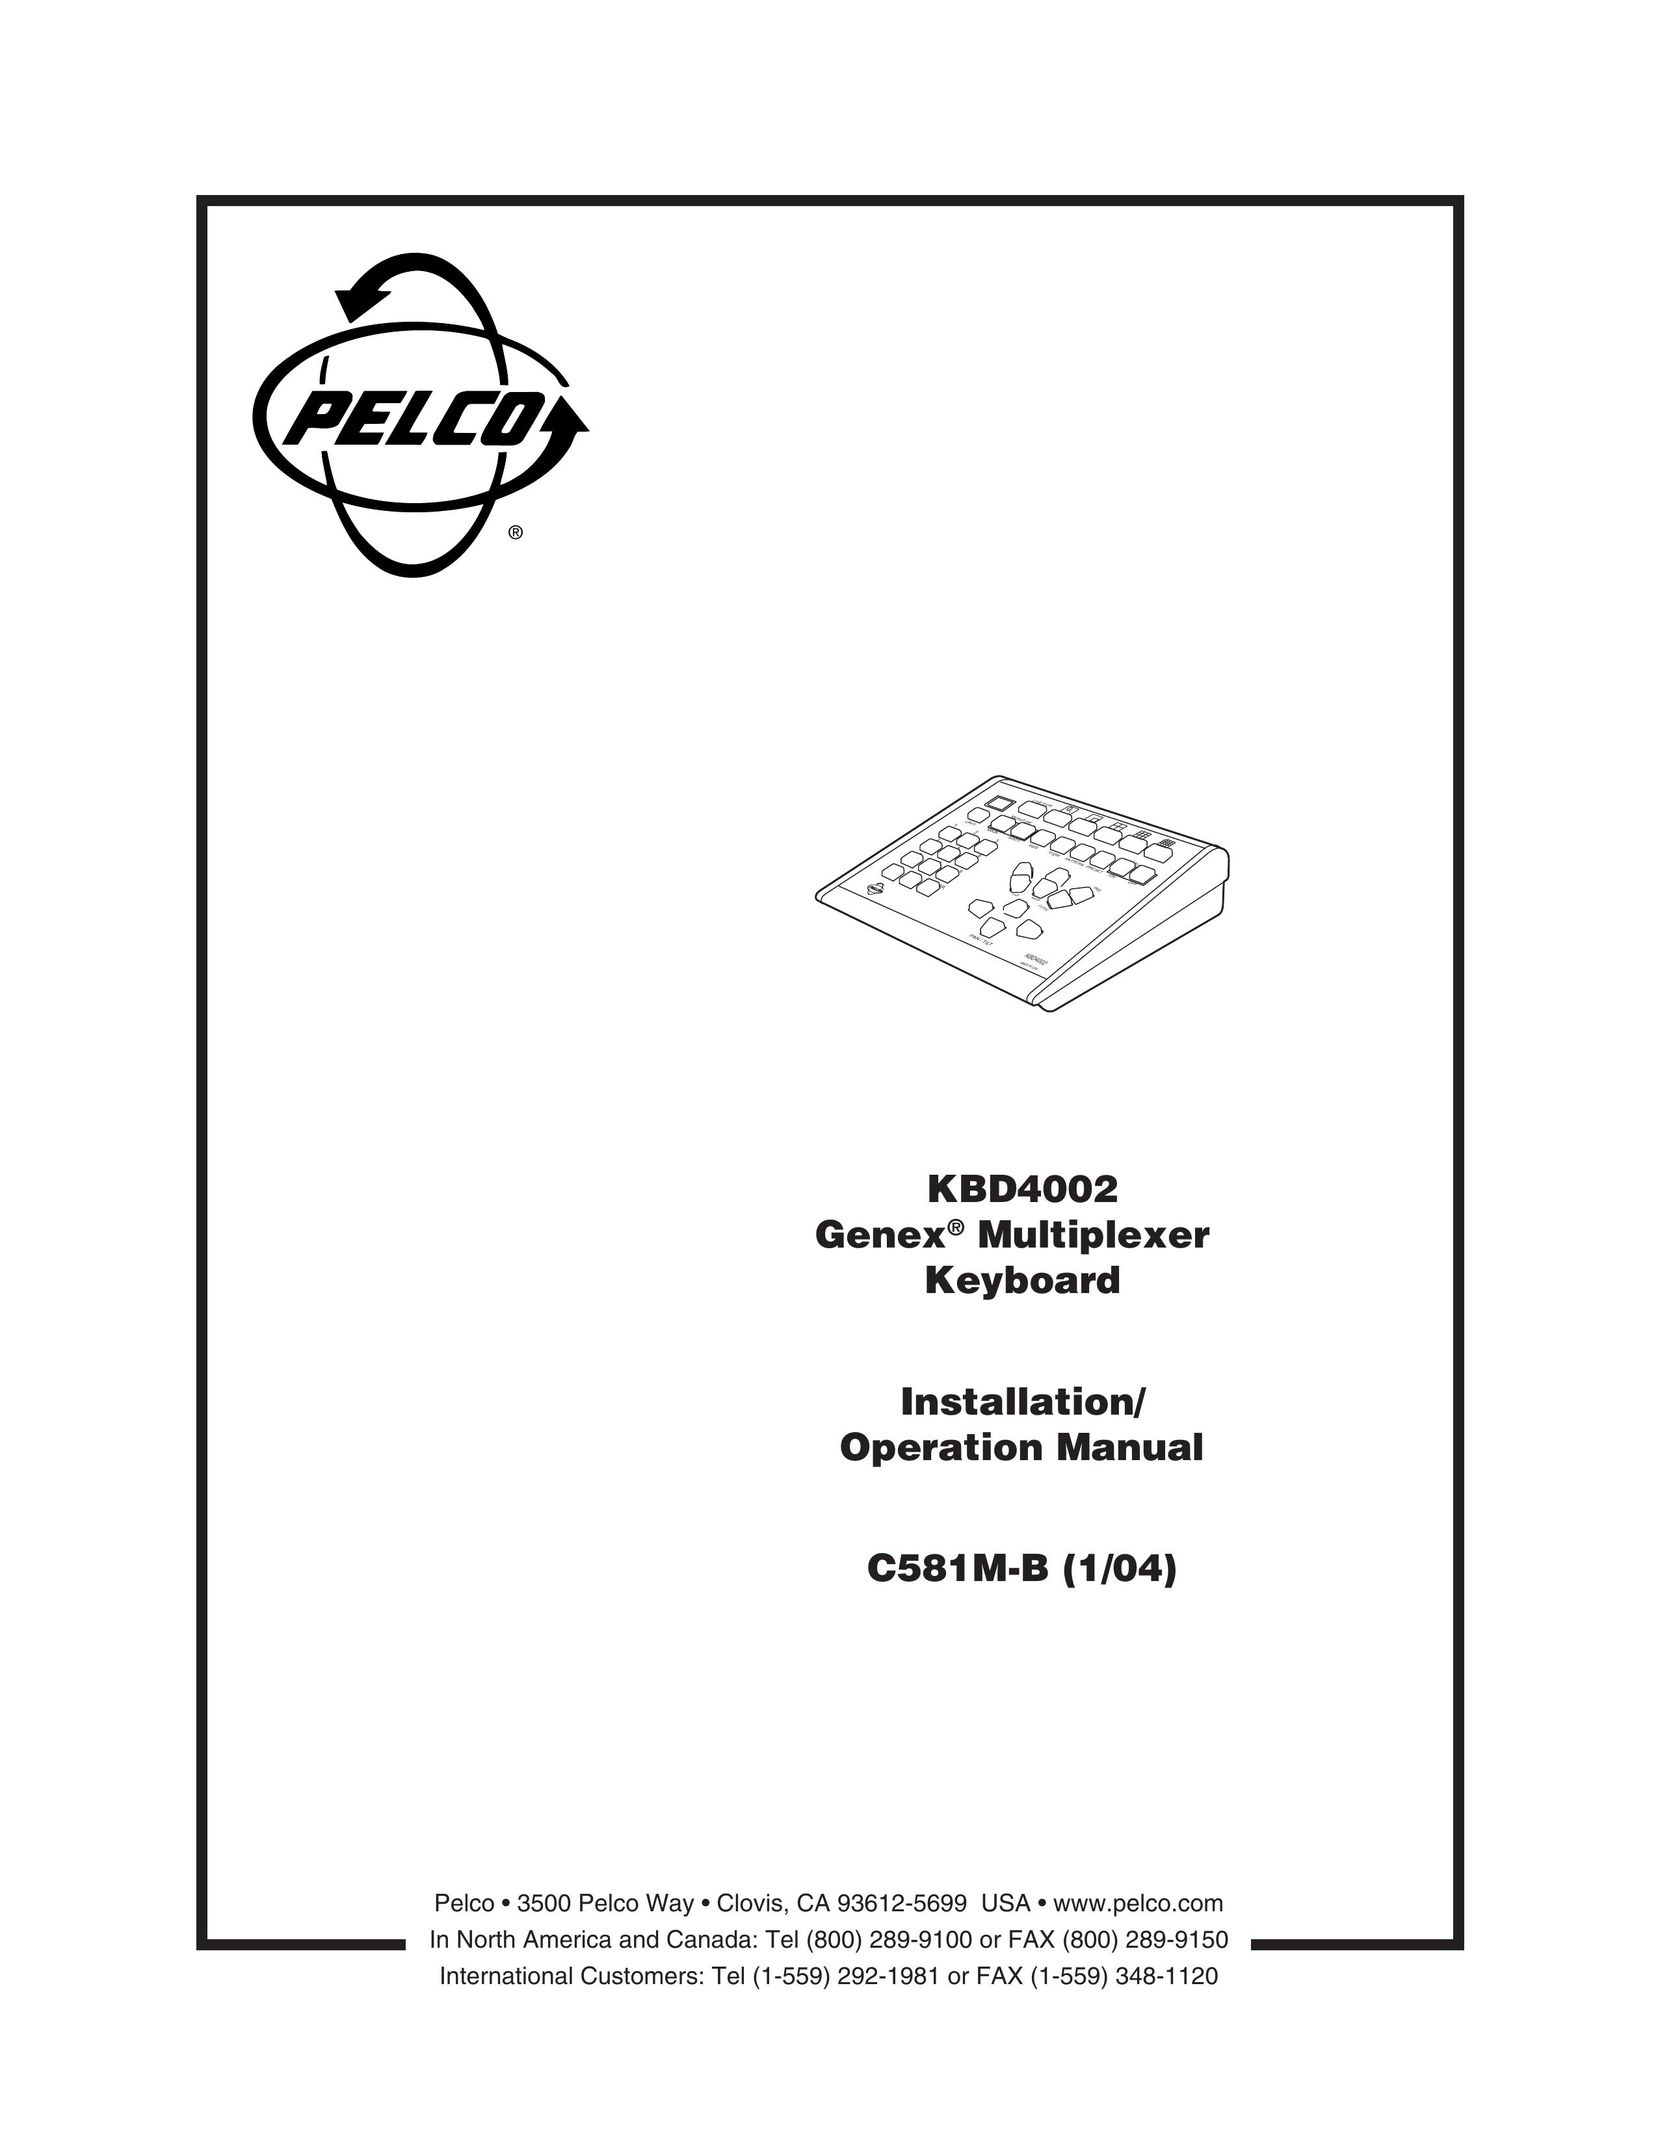 Pelco C581M-B Video Game Keyboard User Manual